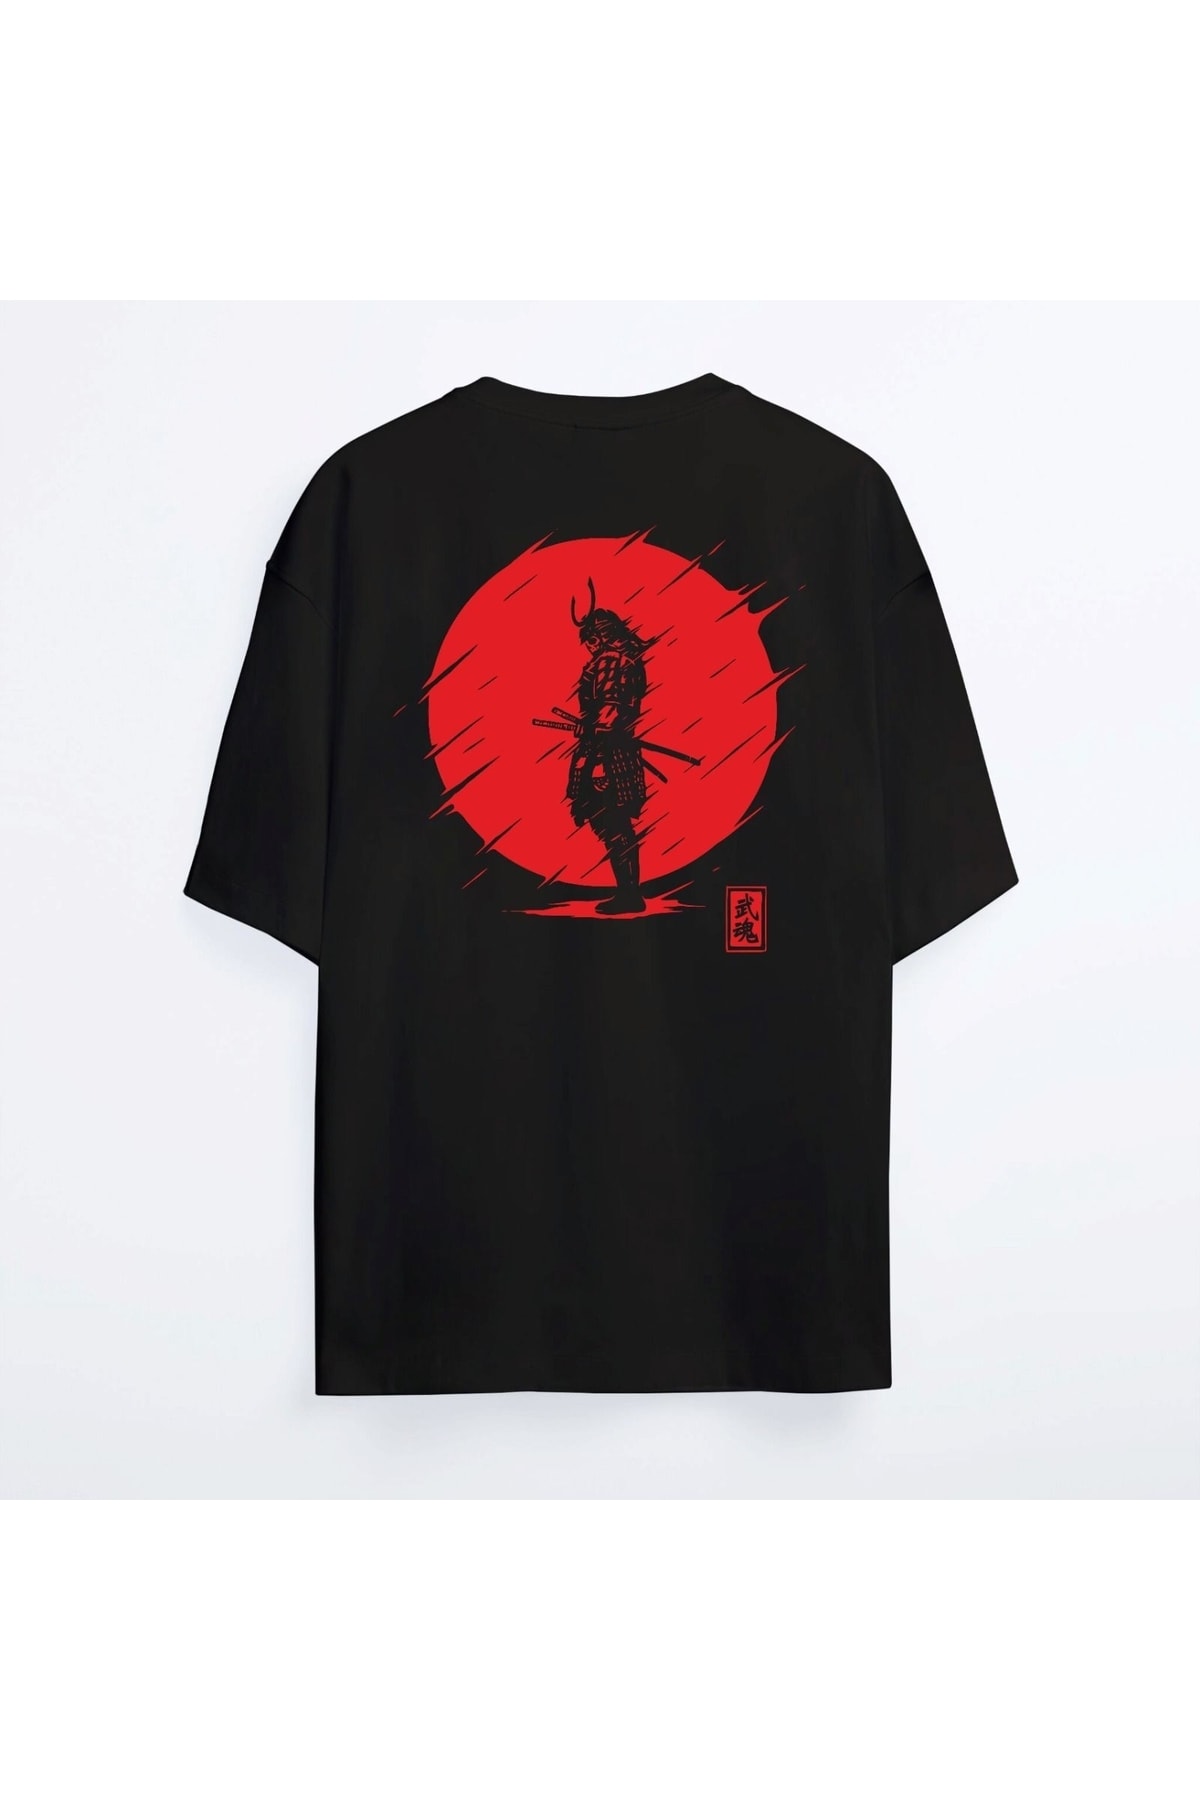 Shout Oversize Samurai Oldschool Unisex T-shirt